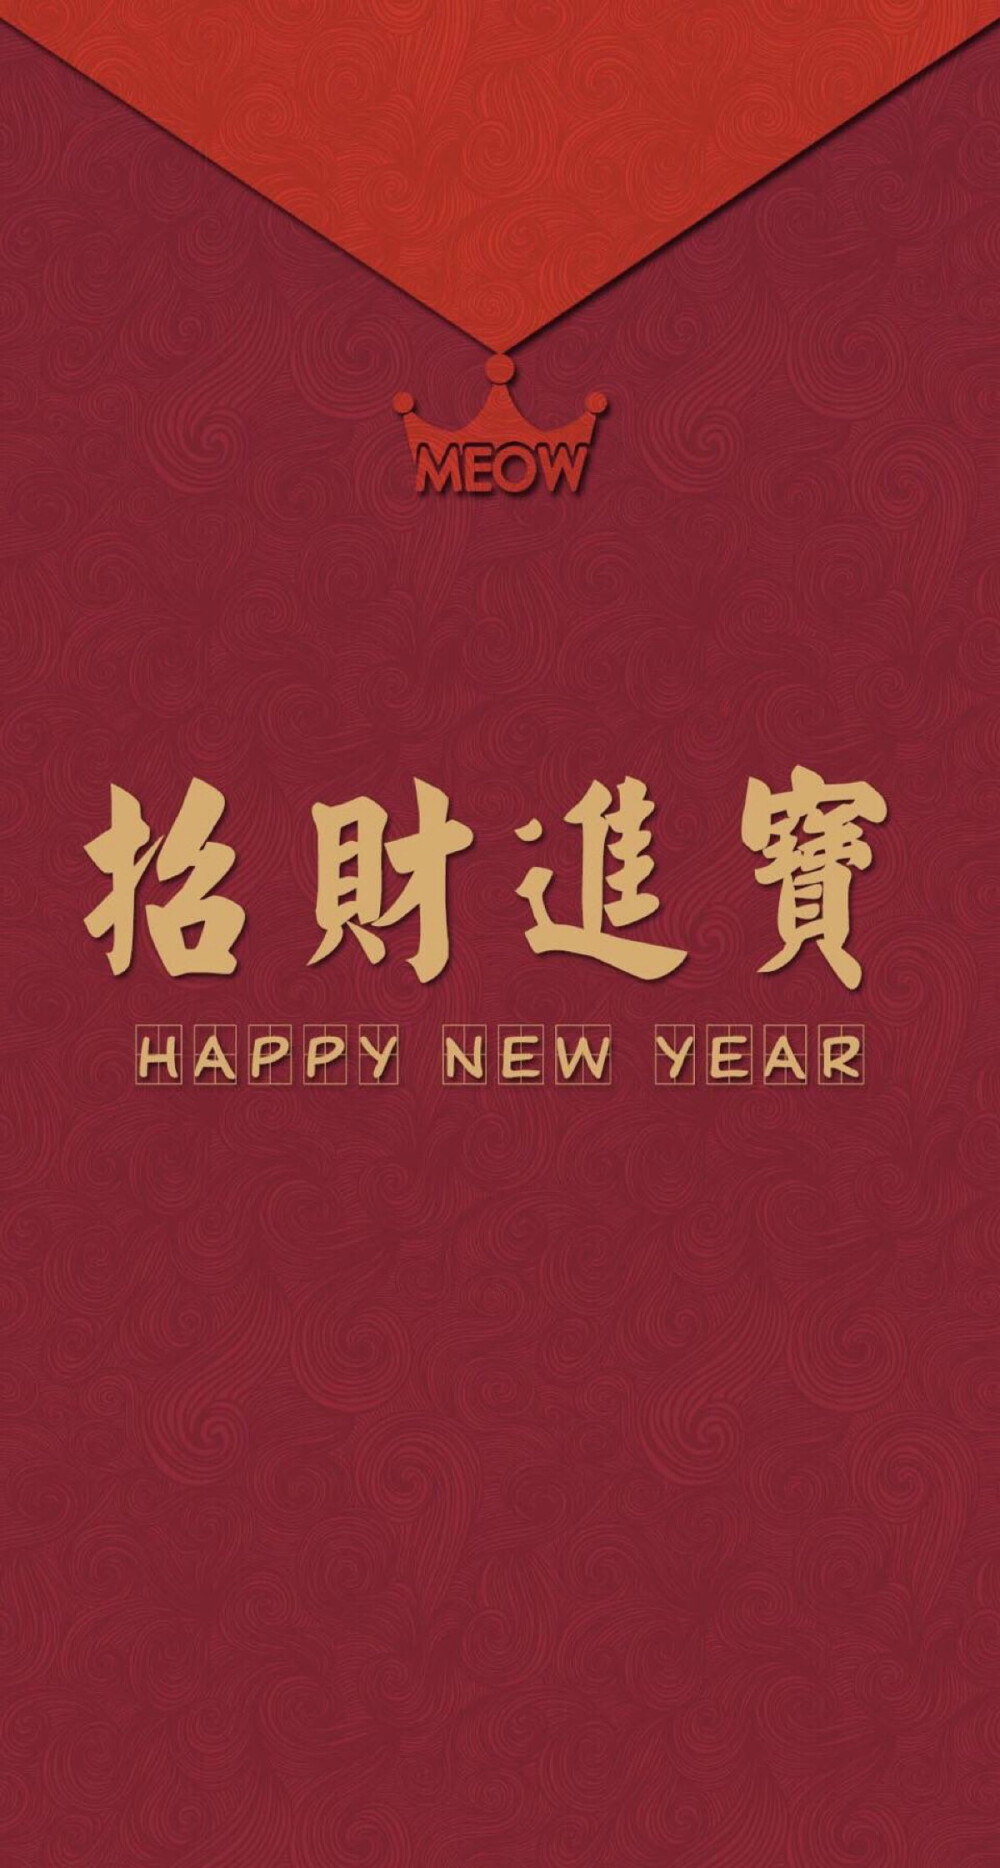 Happy New Year 新年快乐 除夕 新年壁纸 新年愿望 新年祝福 春节壁纸 素材(◕‿◕✿